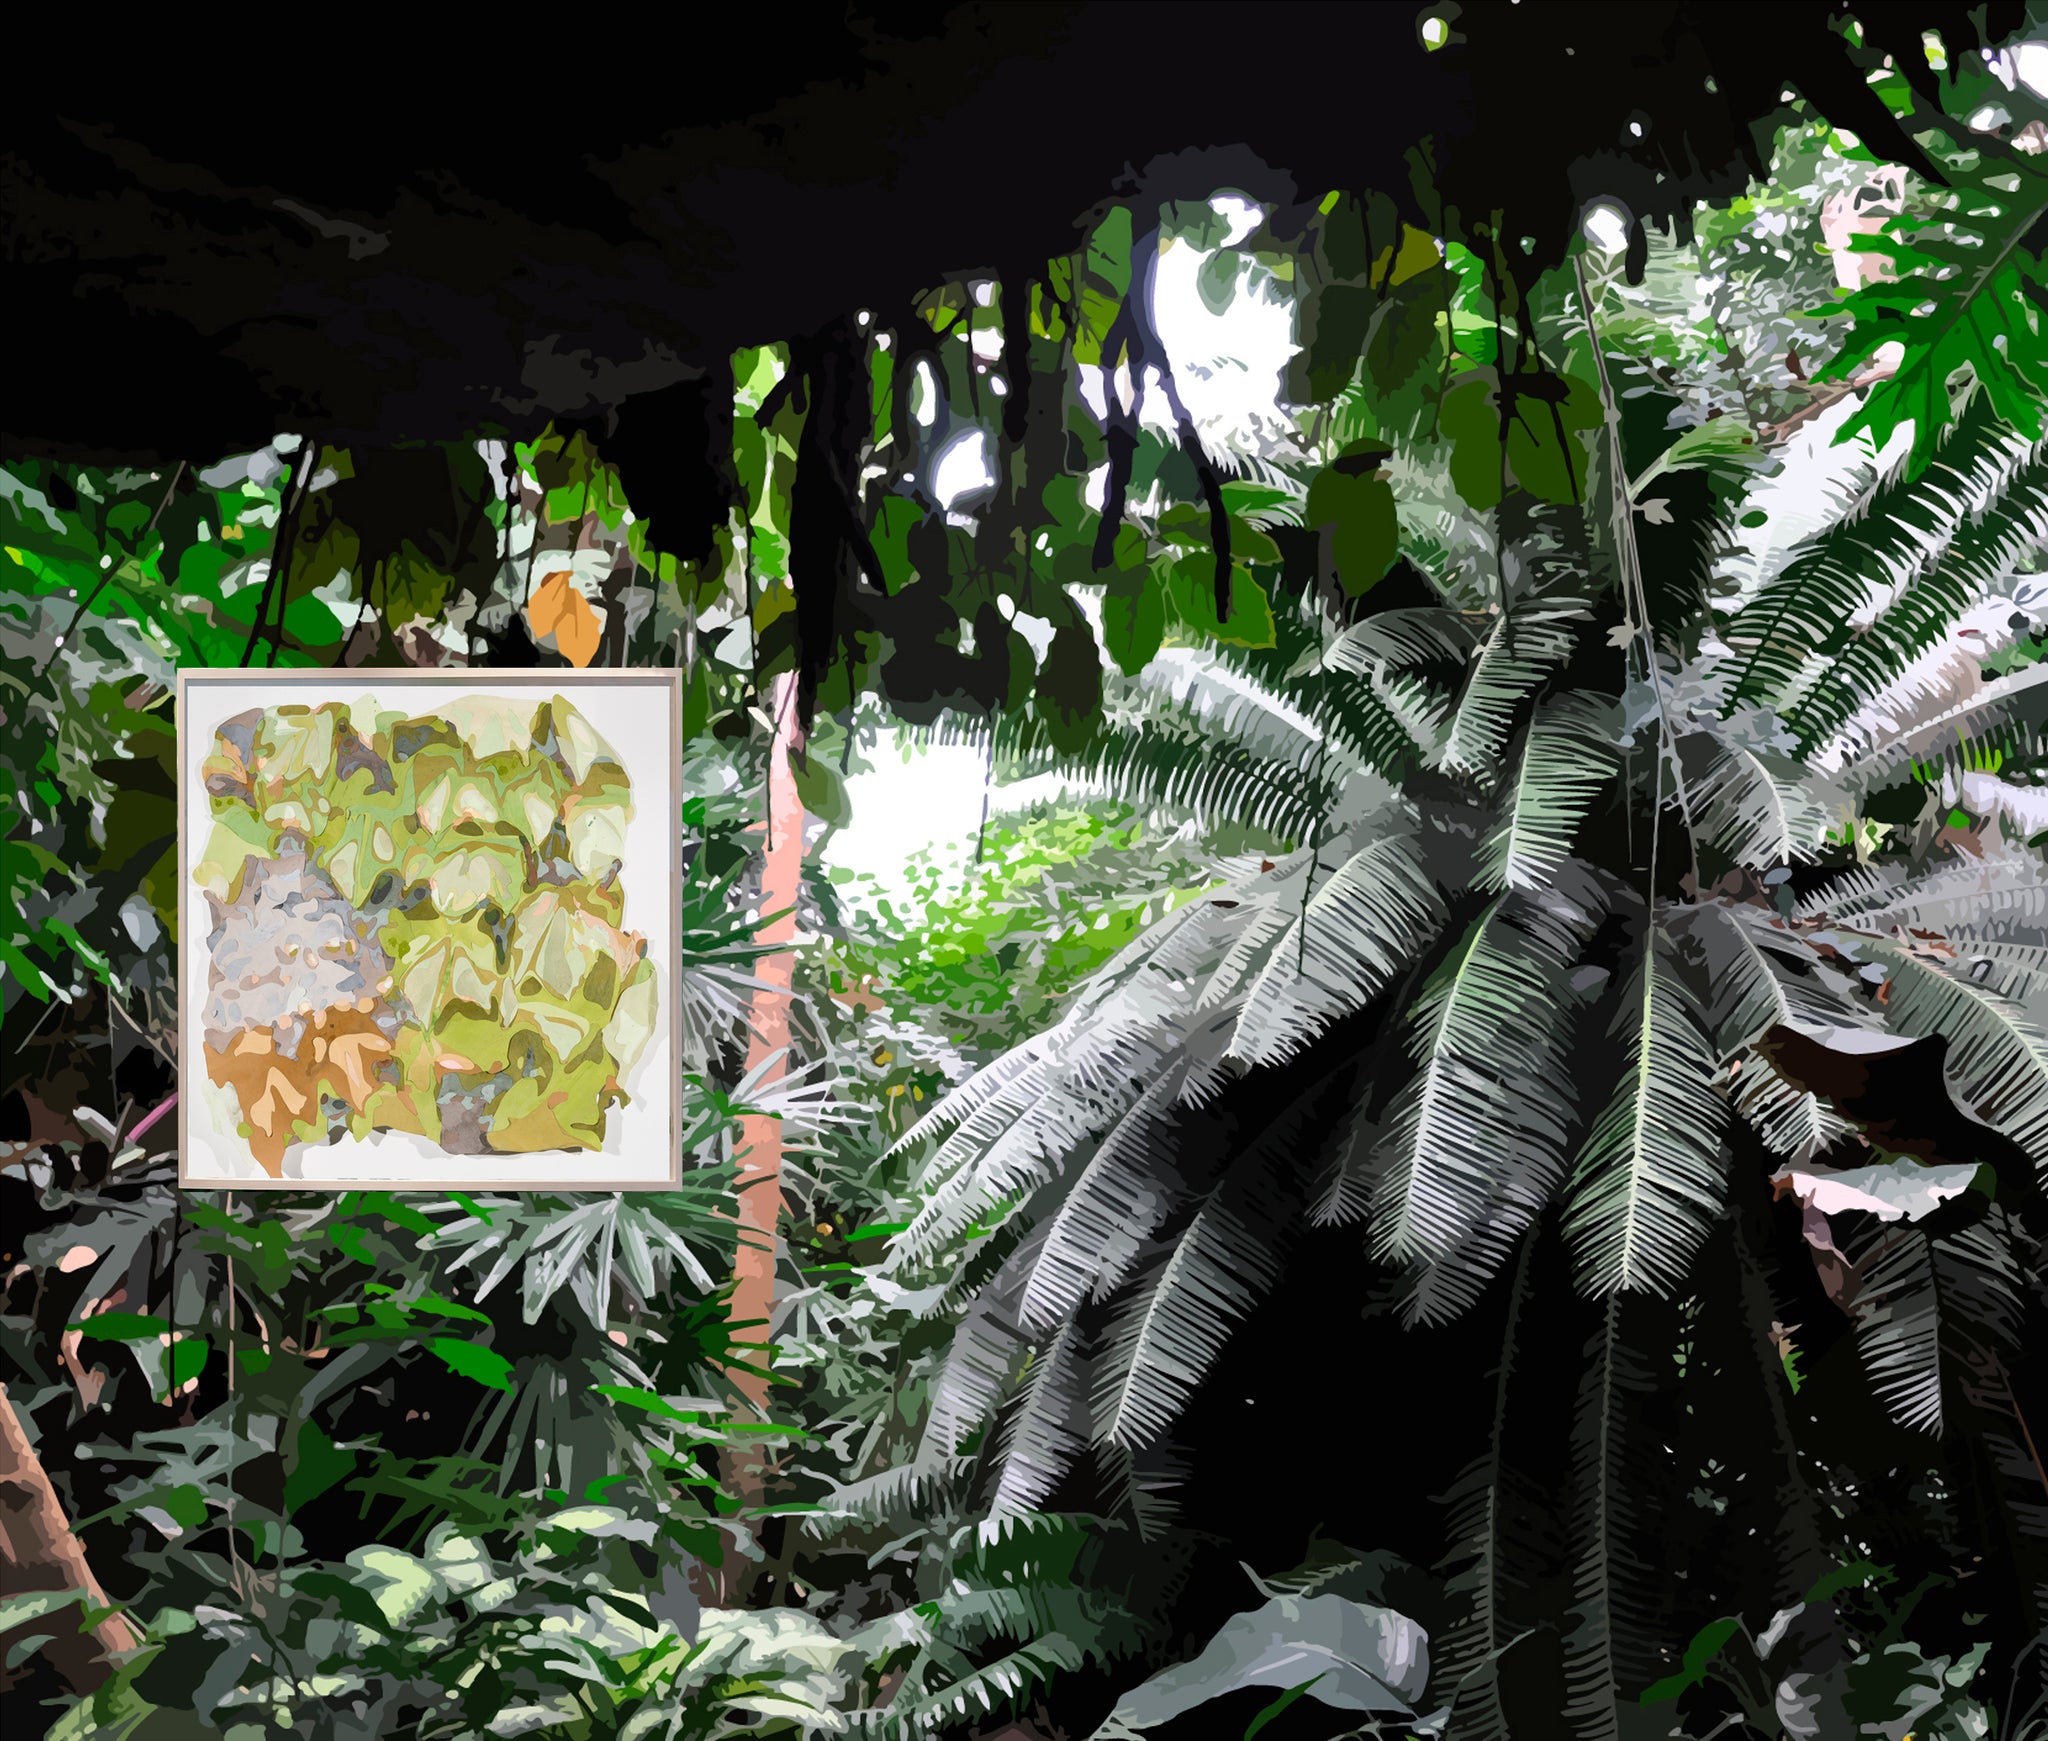 Naomi Kawanishi Reis, "Borrowed Landscape VII (Tropics of Africa, Asia and the Amazon)"